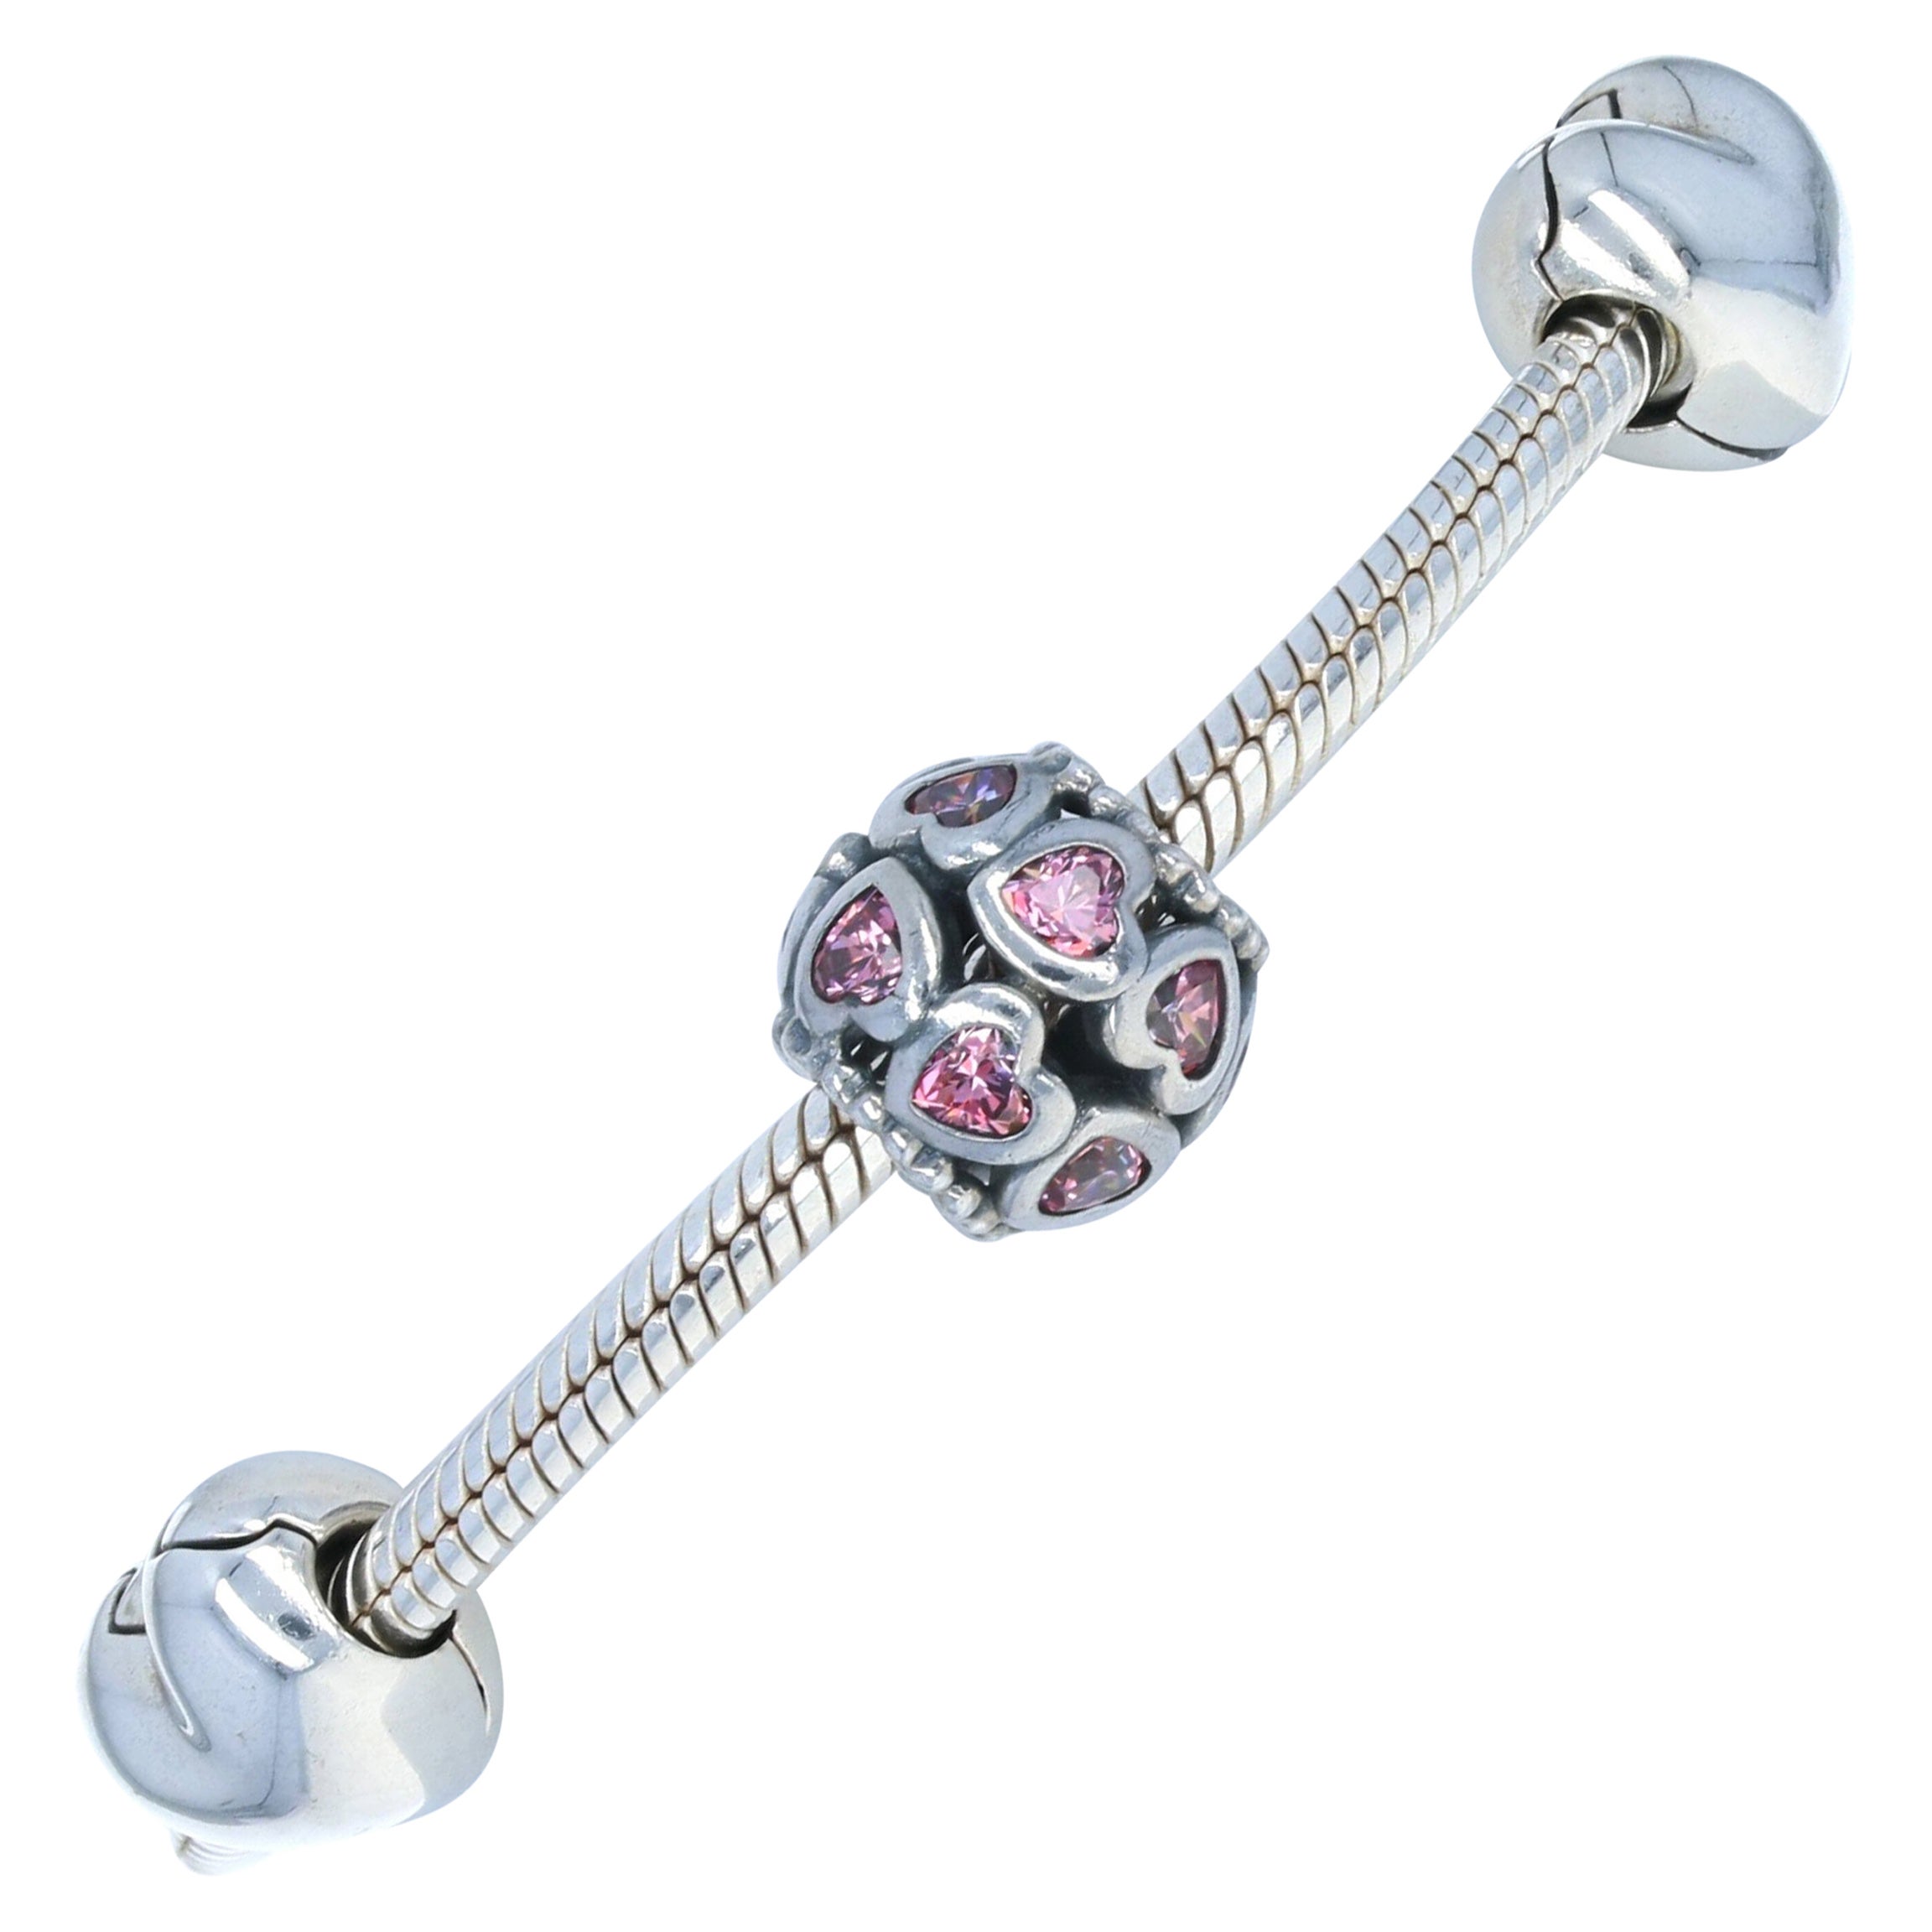 Authentic Pandora from the Heart Ltd Charm Bracelet Set Silver USB793019